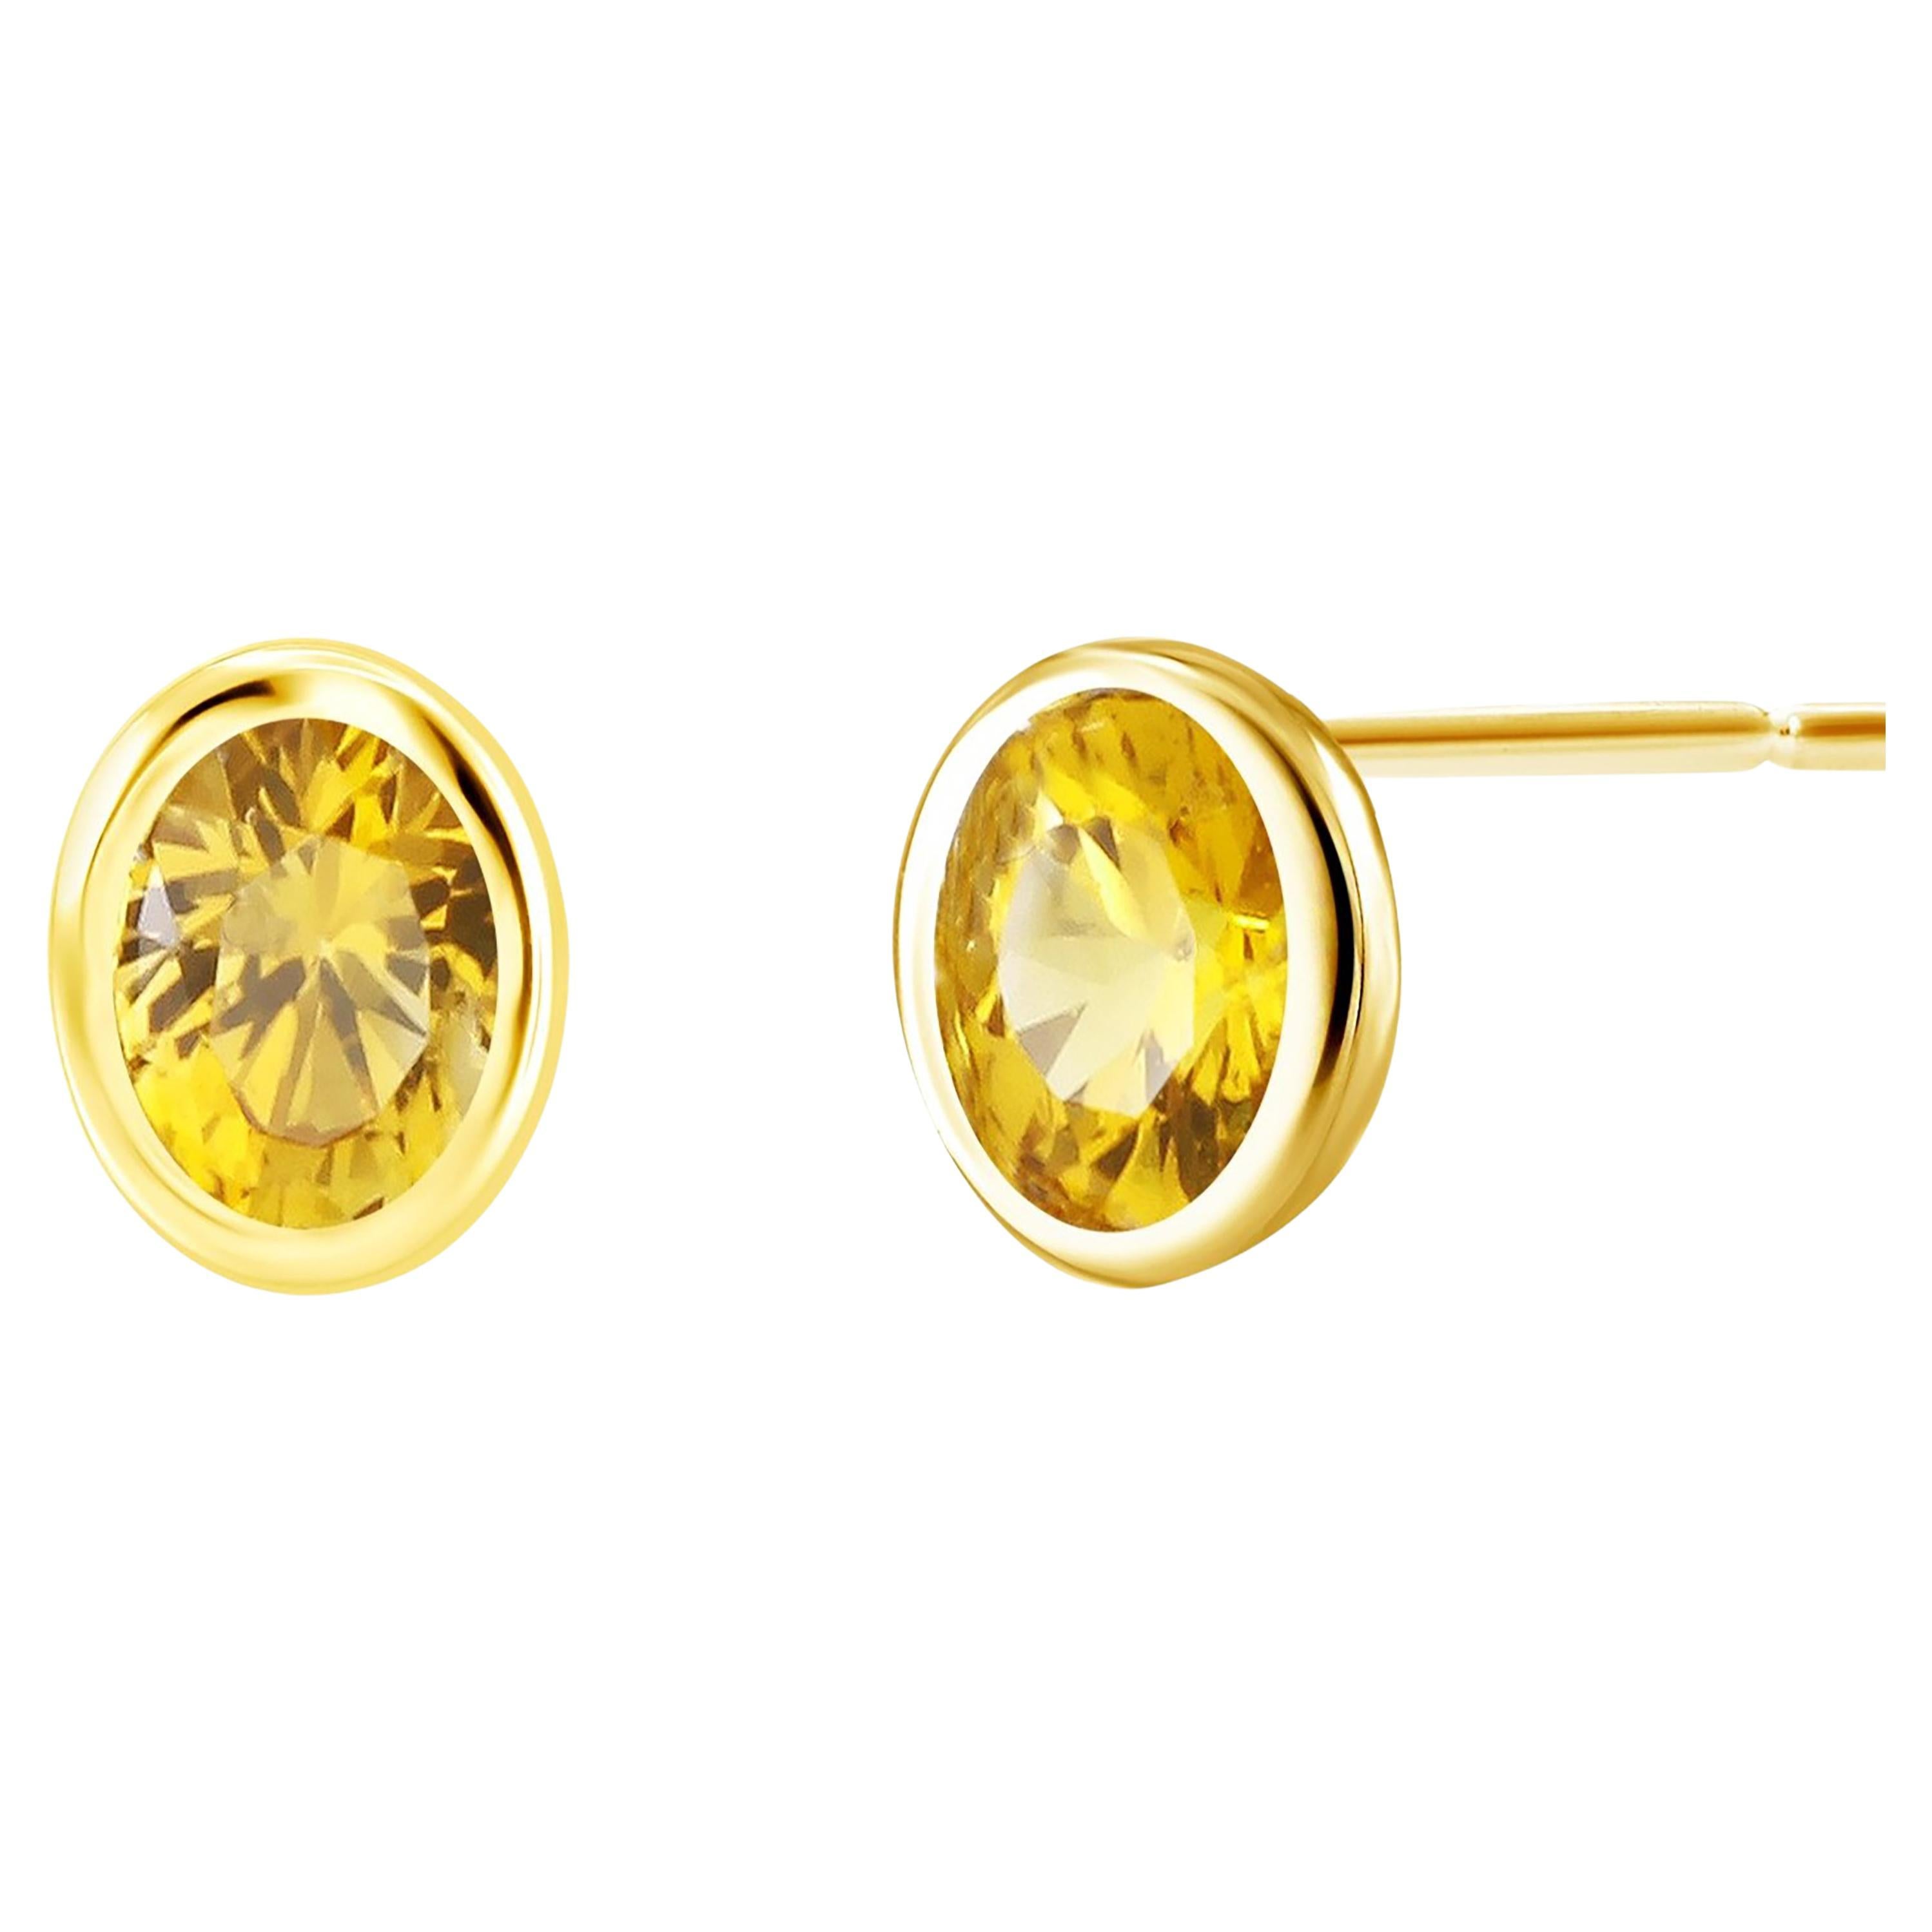 Oval Shaped Yellow Sapphire Bezel Set in Yellow Gold Stud Earrings